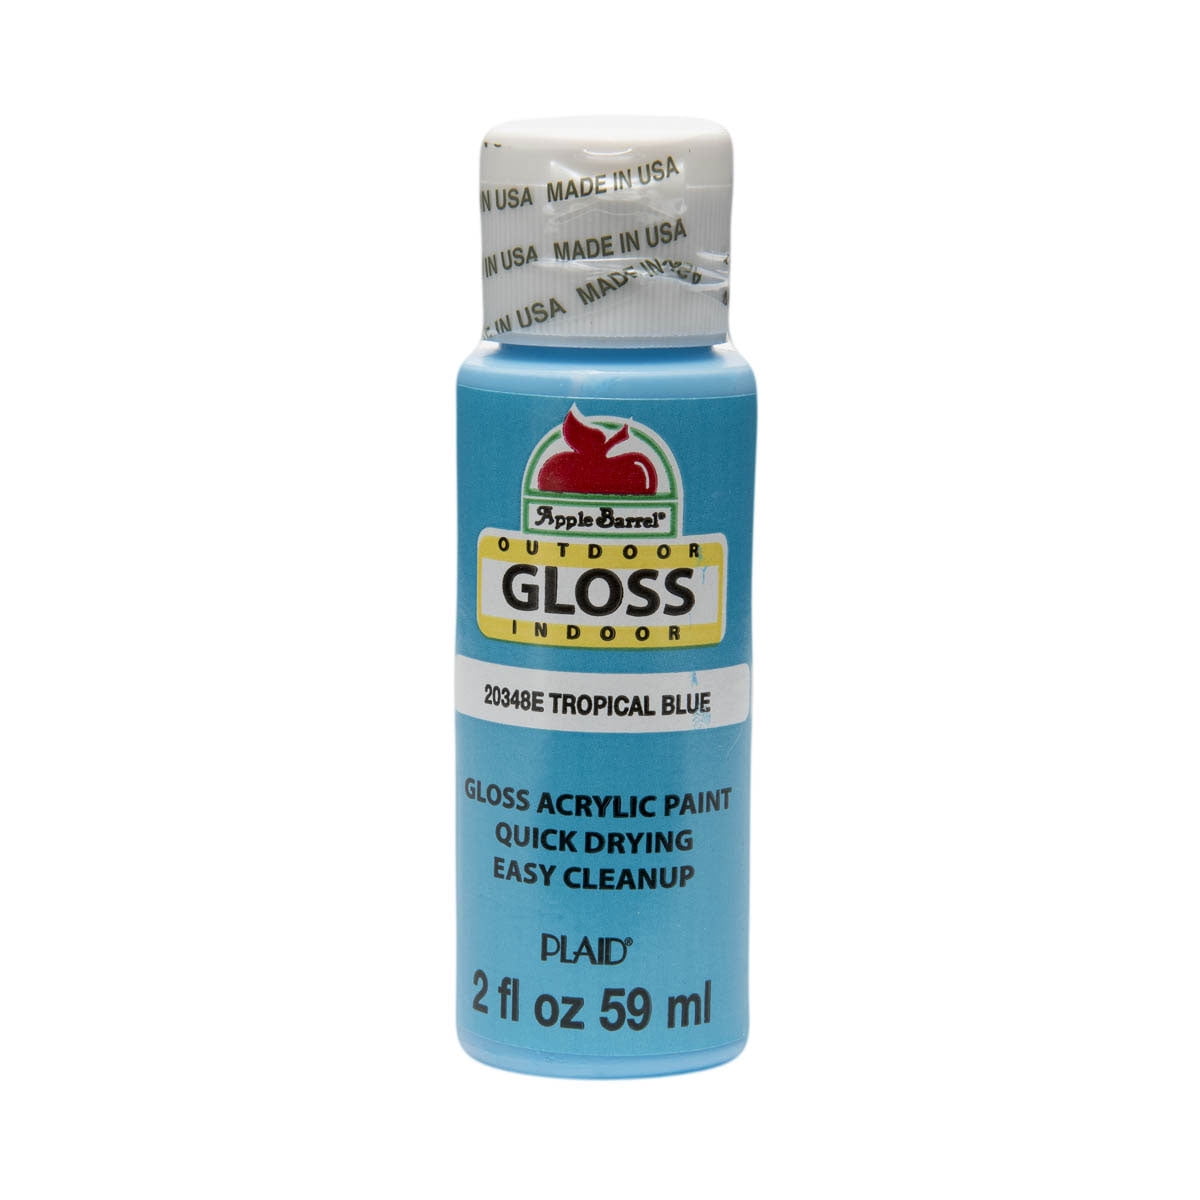 Clear gloss. Glossy finish. Краска акриловая " finish Premium" рав 7047. Acrylic Gloss Varnish состав. Gloss Paint.